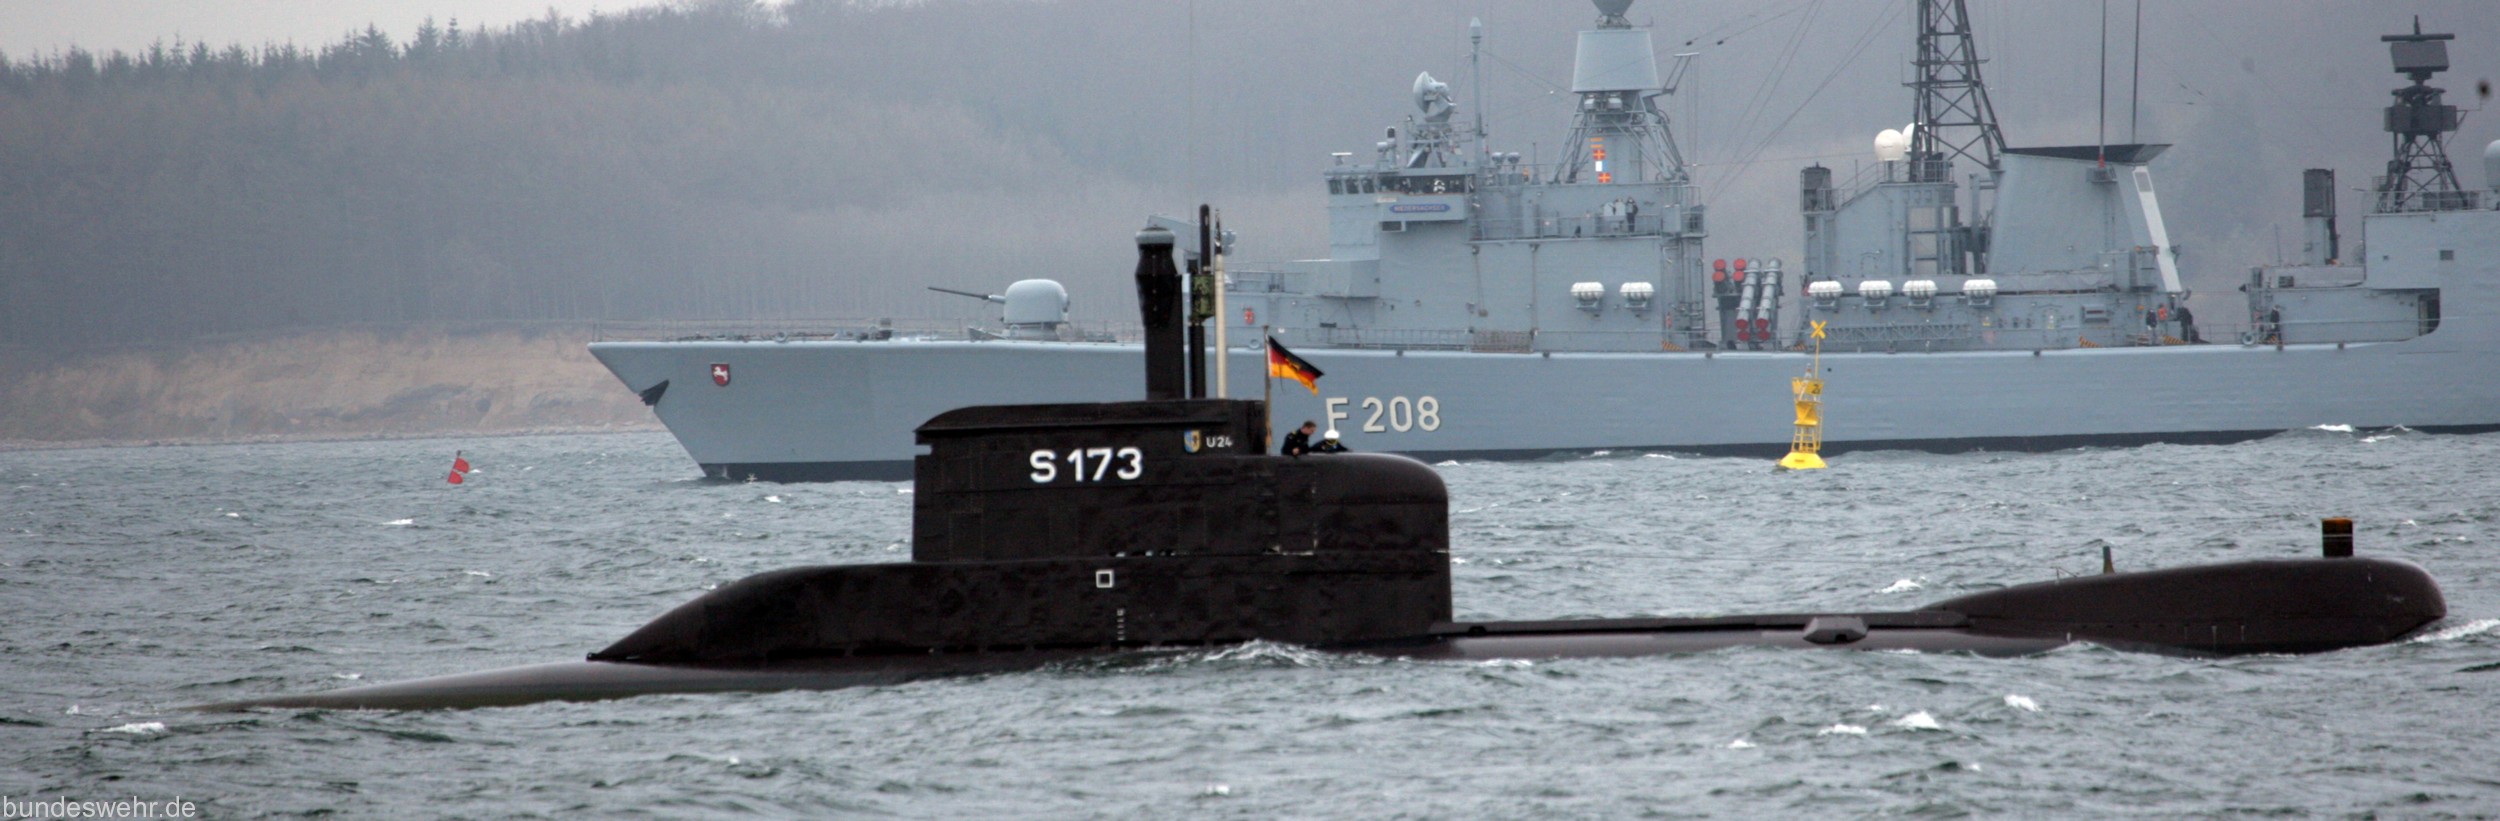 s-173 fgs u24 type 206 class submarine german navy 02